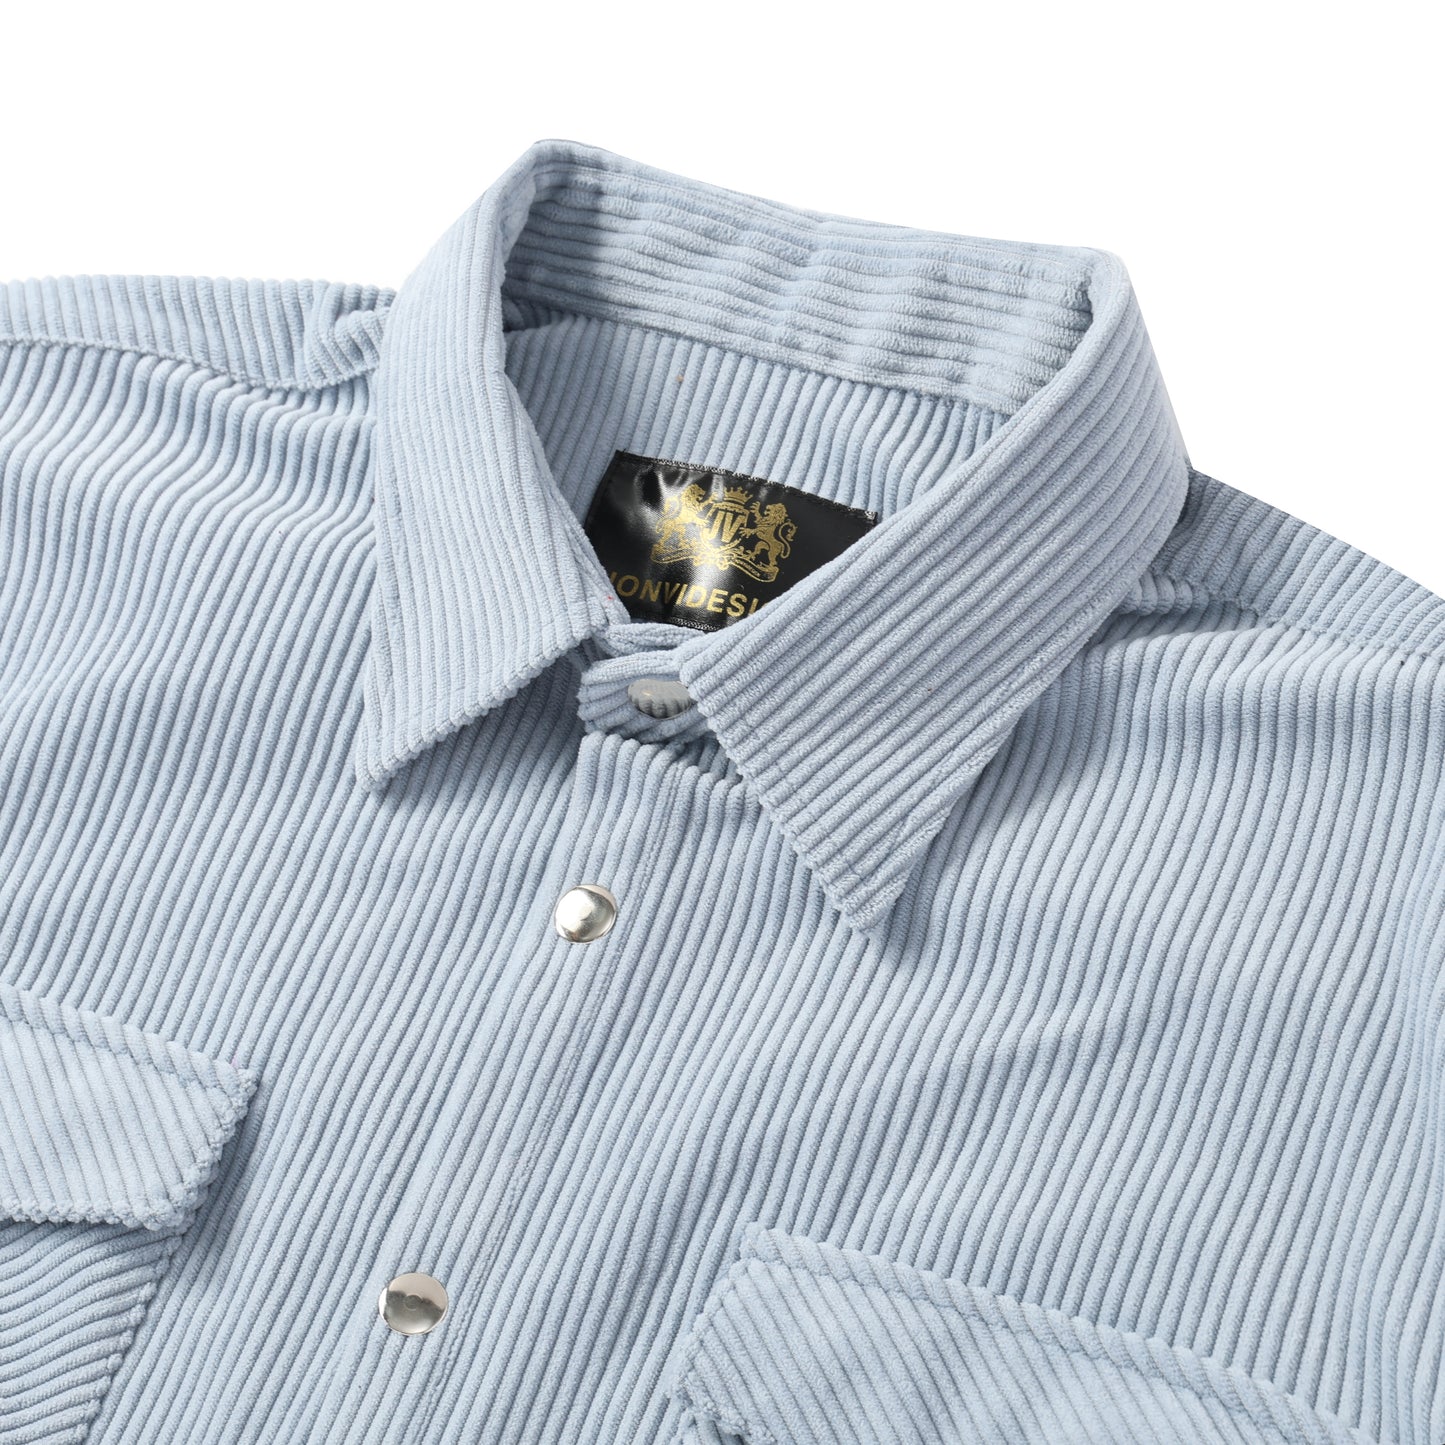 Corduroy Plain Color Snap Closure Long Sleeve Shirt-Light Blue